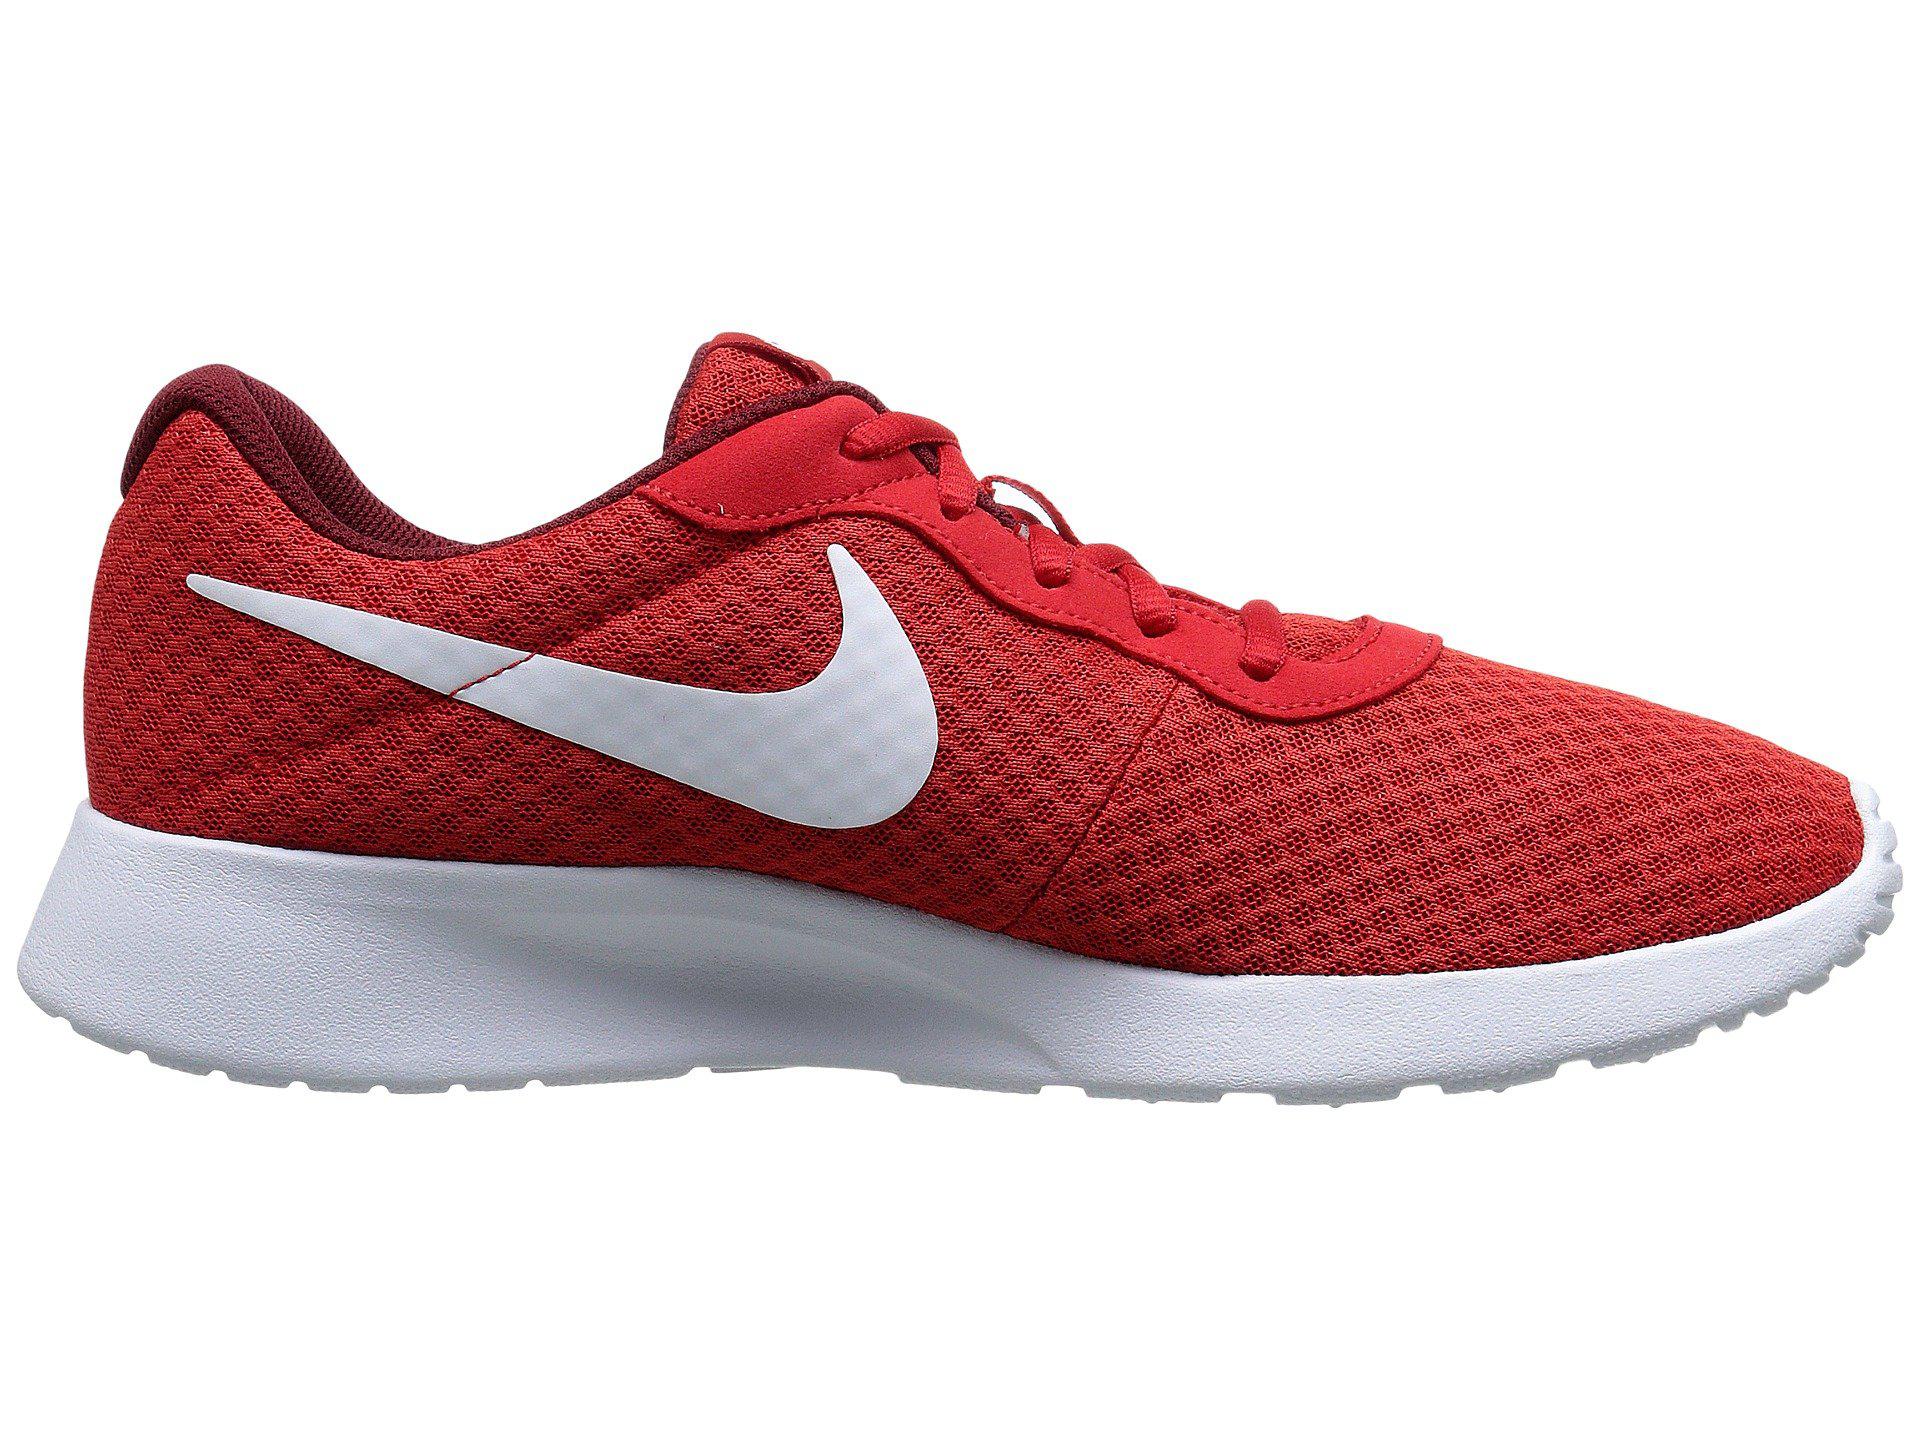 Nike Tanjun' Running Shoes in Red for Men - Lyst